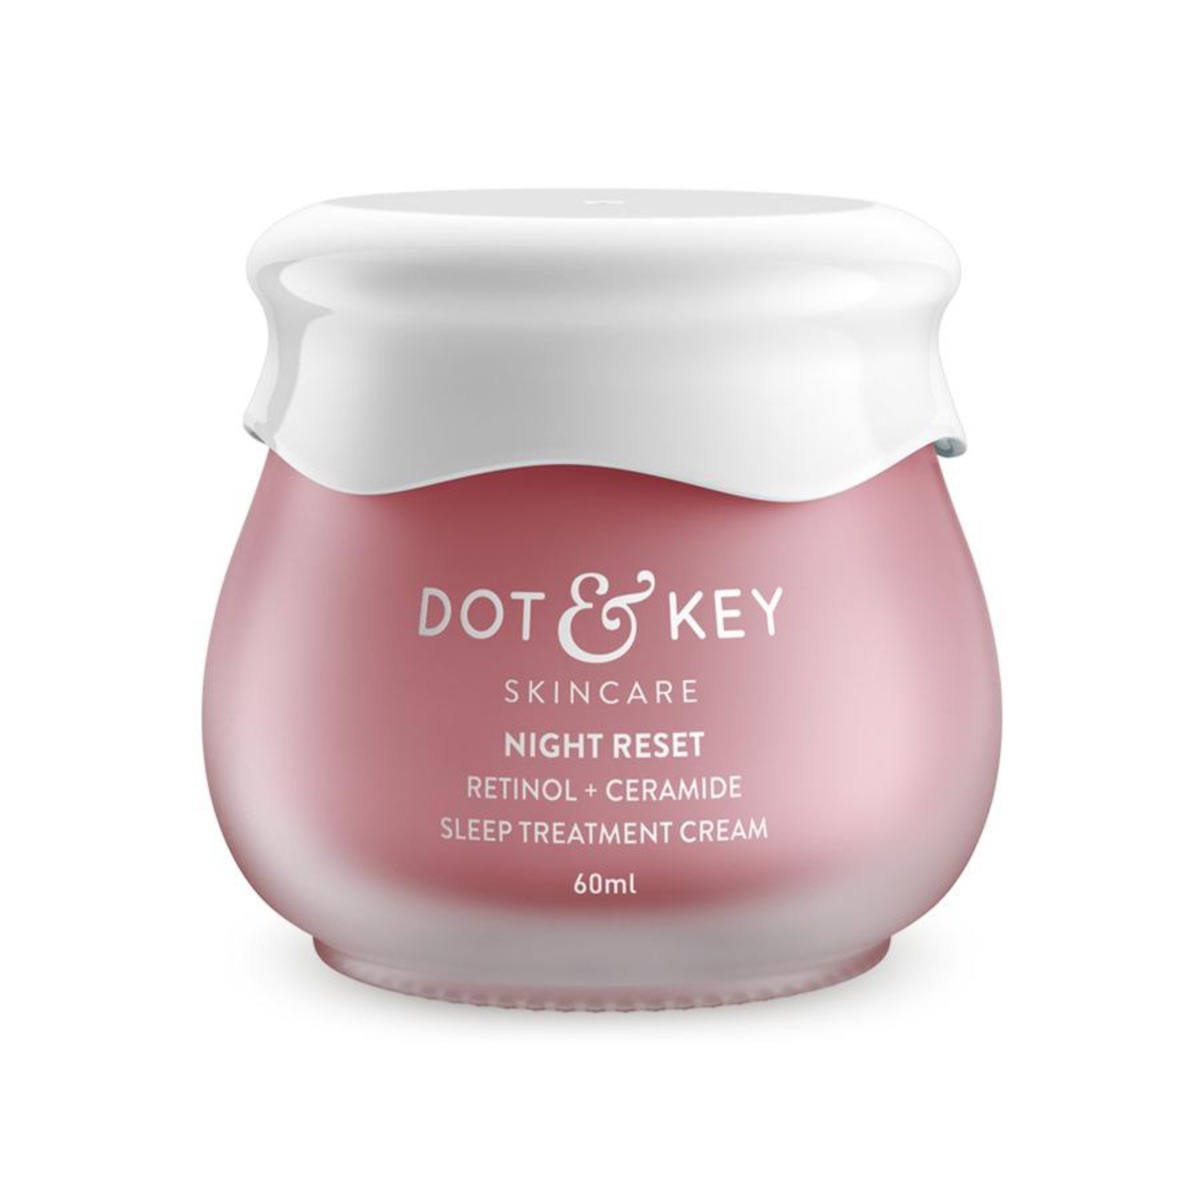 Dot & Key Night Reset Retinol + Ceramide Sleep Treatment Cream, 60 ml